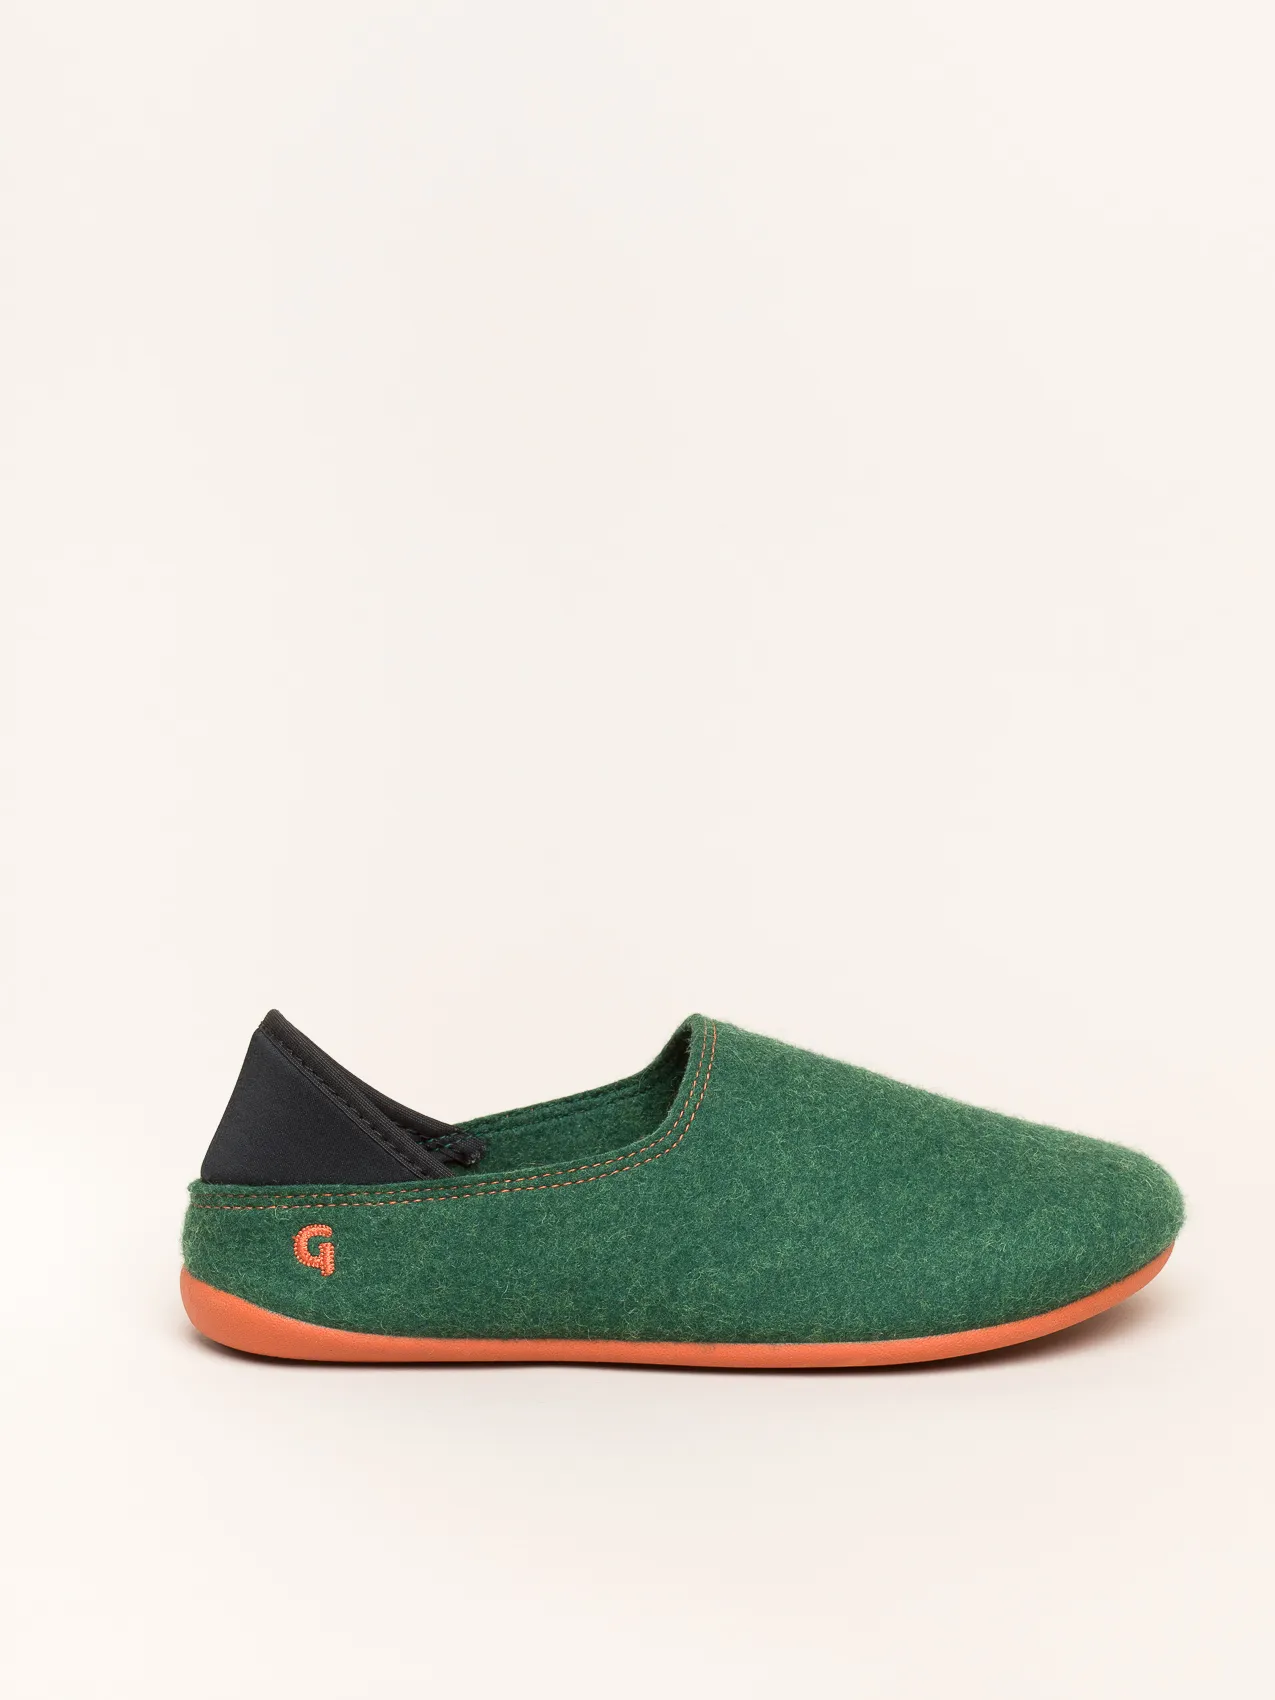 Wool Slip On-Filzhausschuh-green-orange (3)